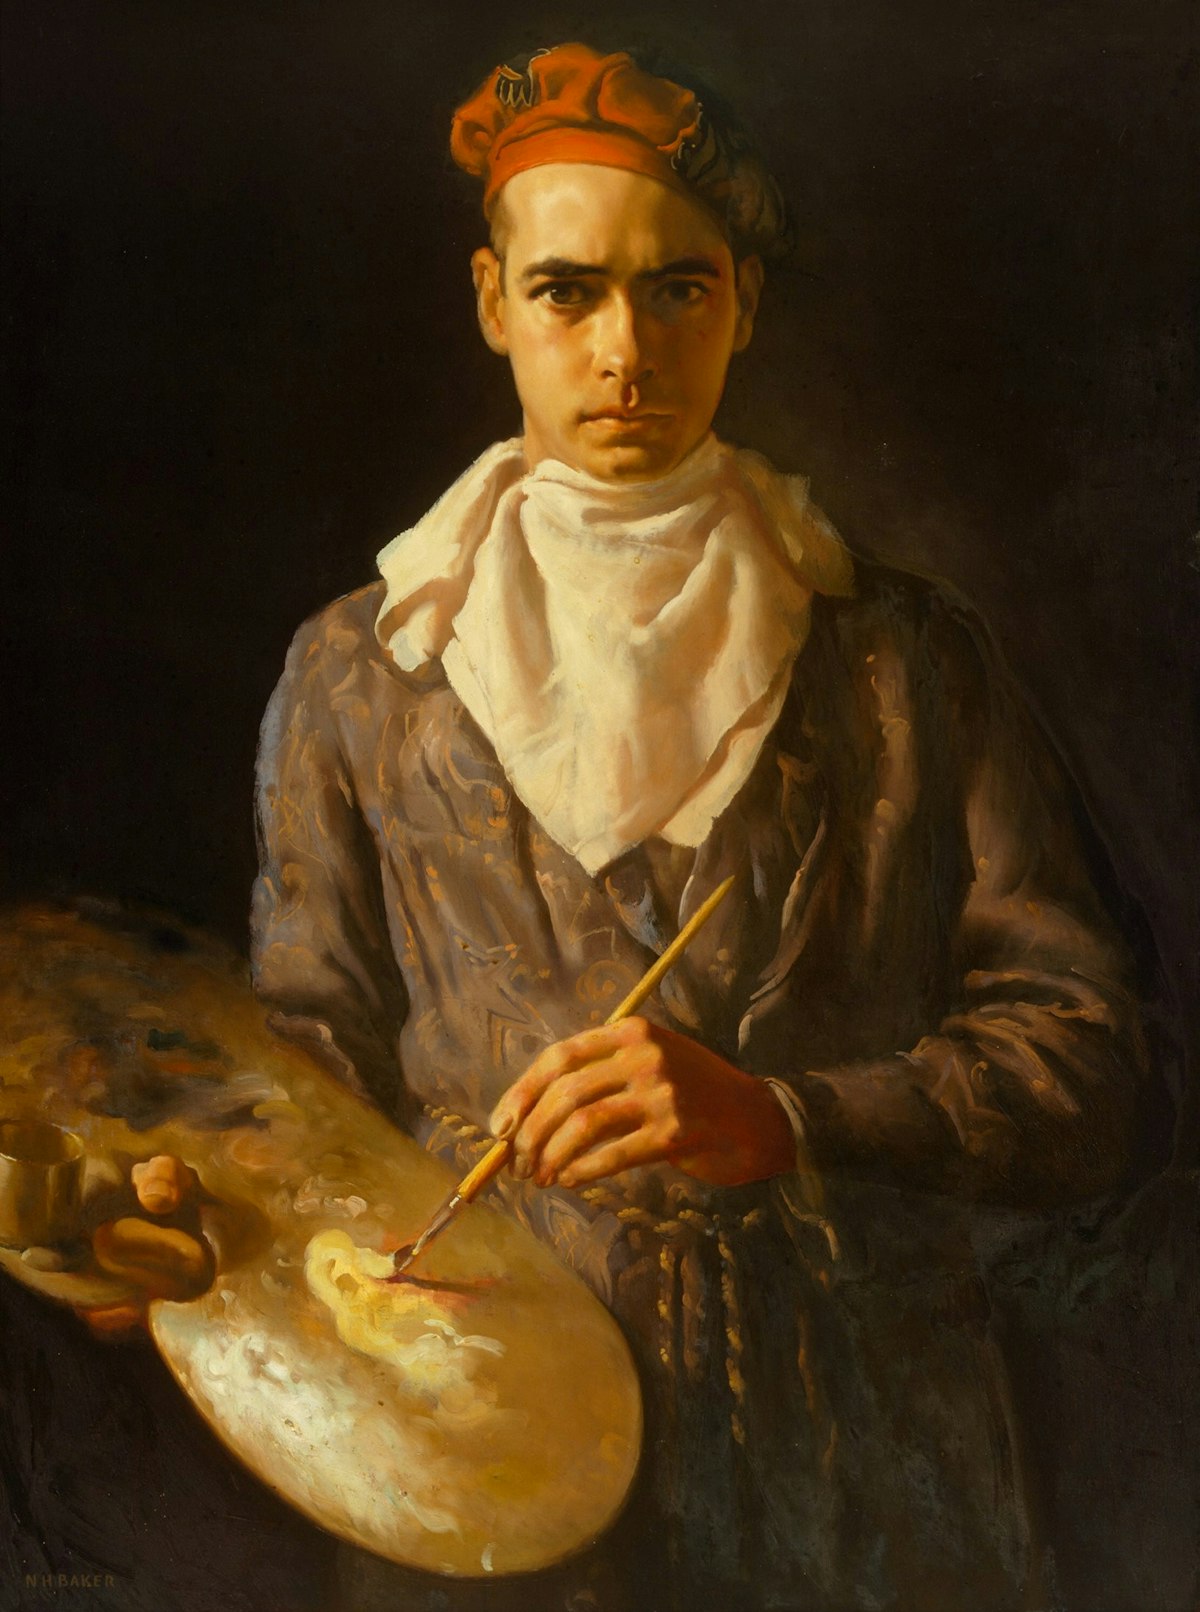 Detail of Normand Baker’s 1937 Archibald winning self-portrait